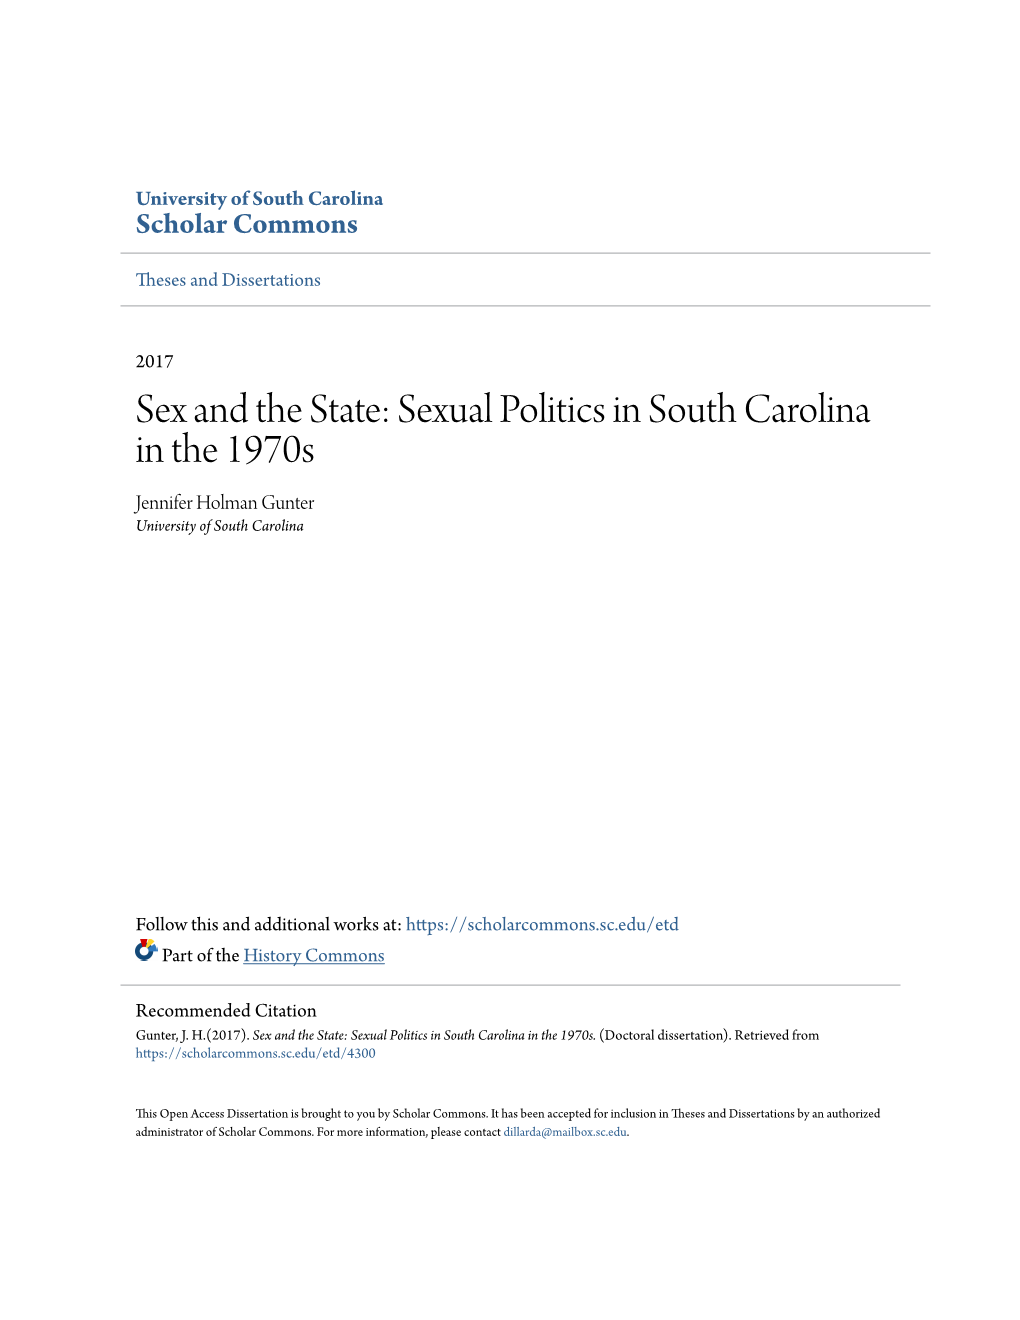 Sexual Politics in South Carolina in the 1970S Jennifer Holman Gunter University of South Carolina